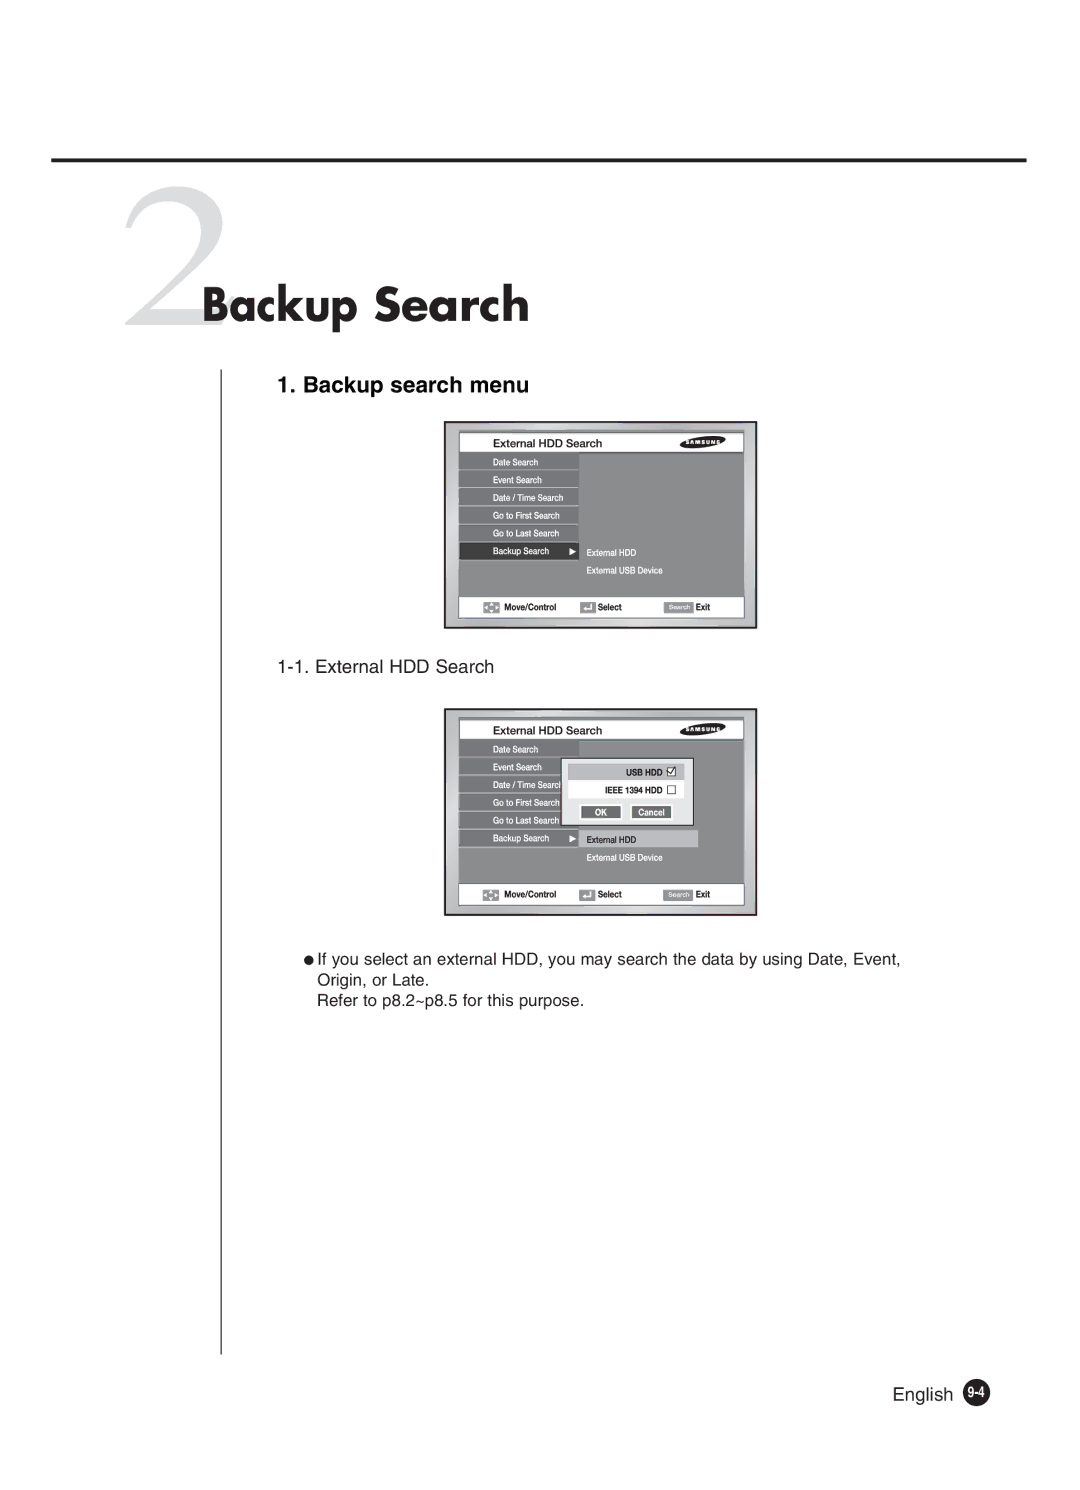 Samsung SHR-4160P manual 2Backup Search, Backup search menu, External HDD Search 